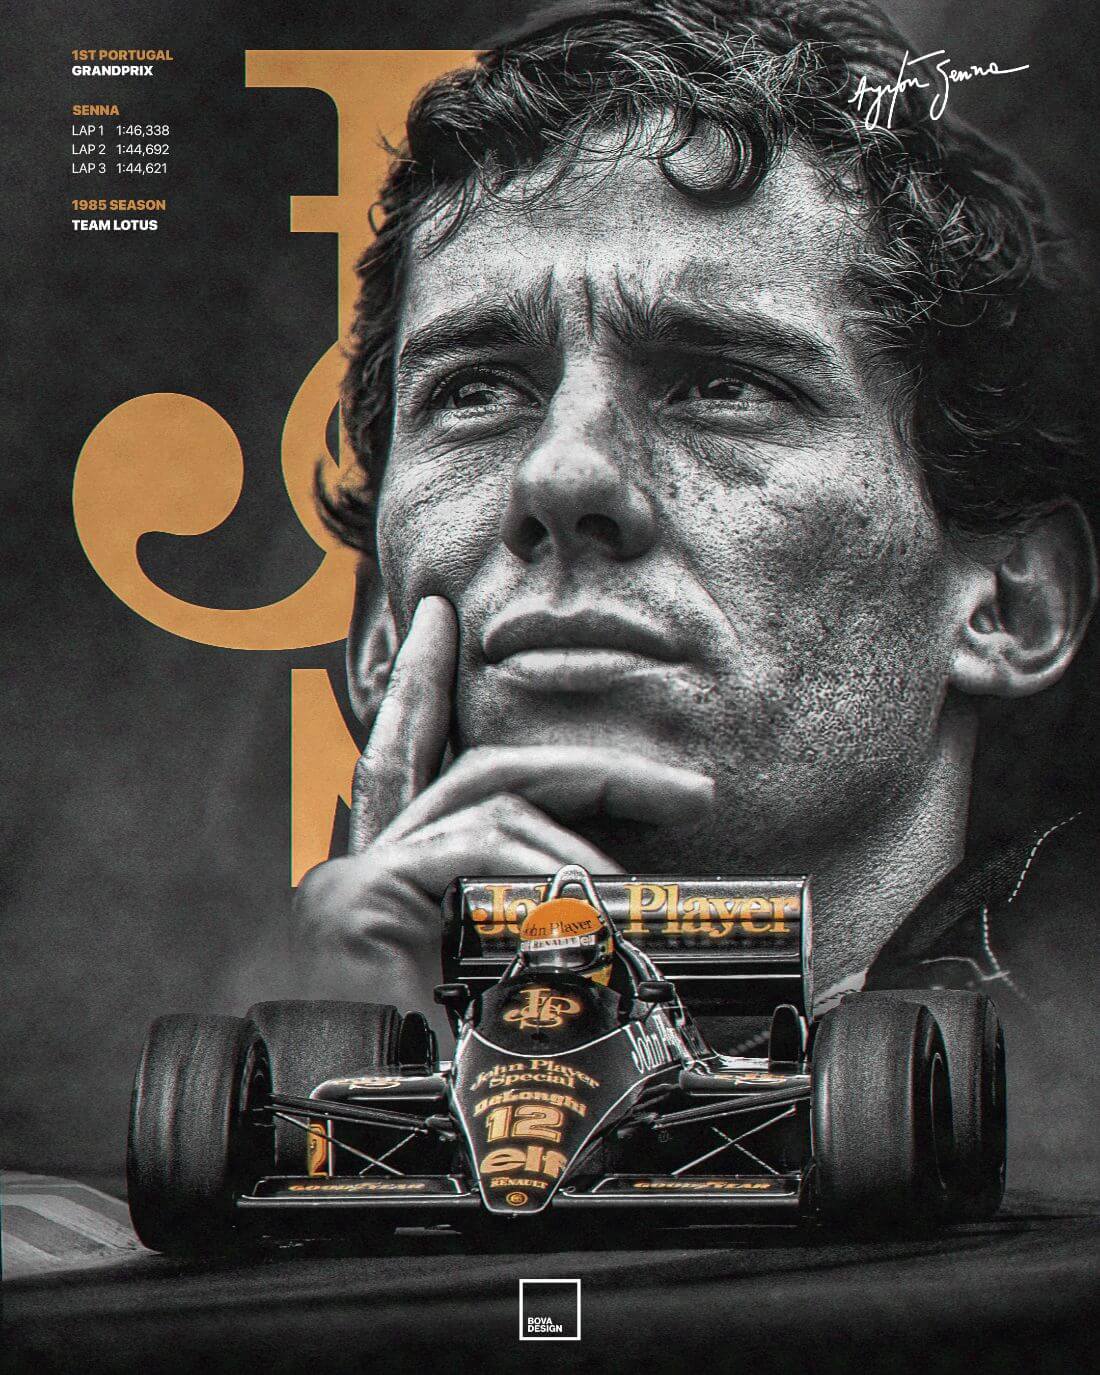 Ayrton Senna - Formula 1 Racing - Lotus - Motosport Poster - Large